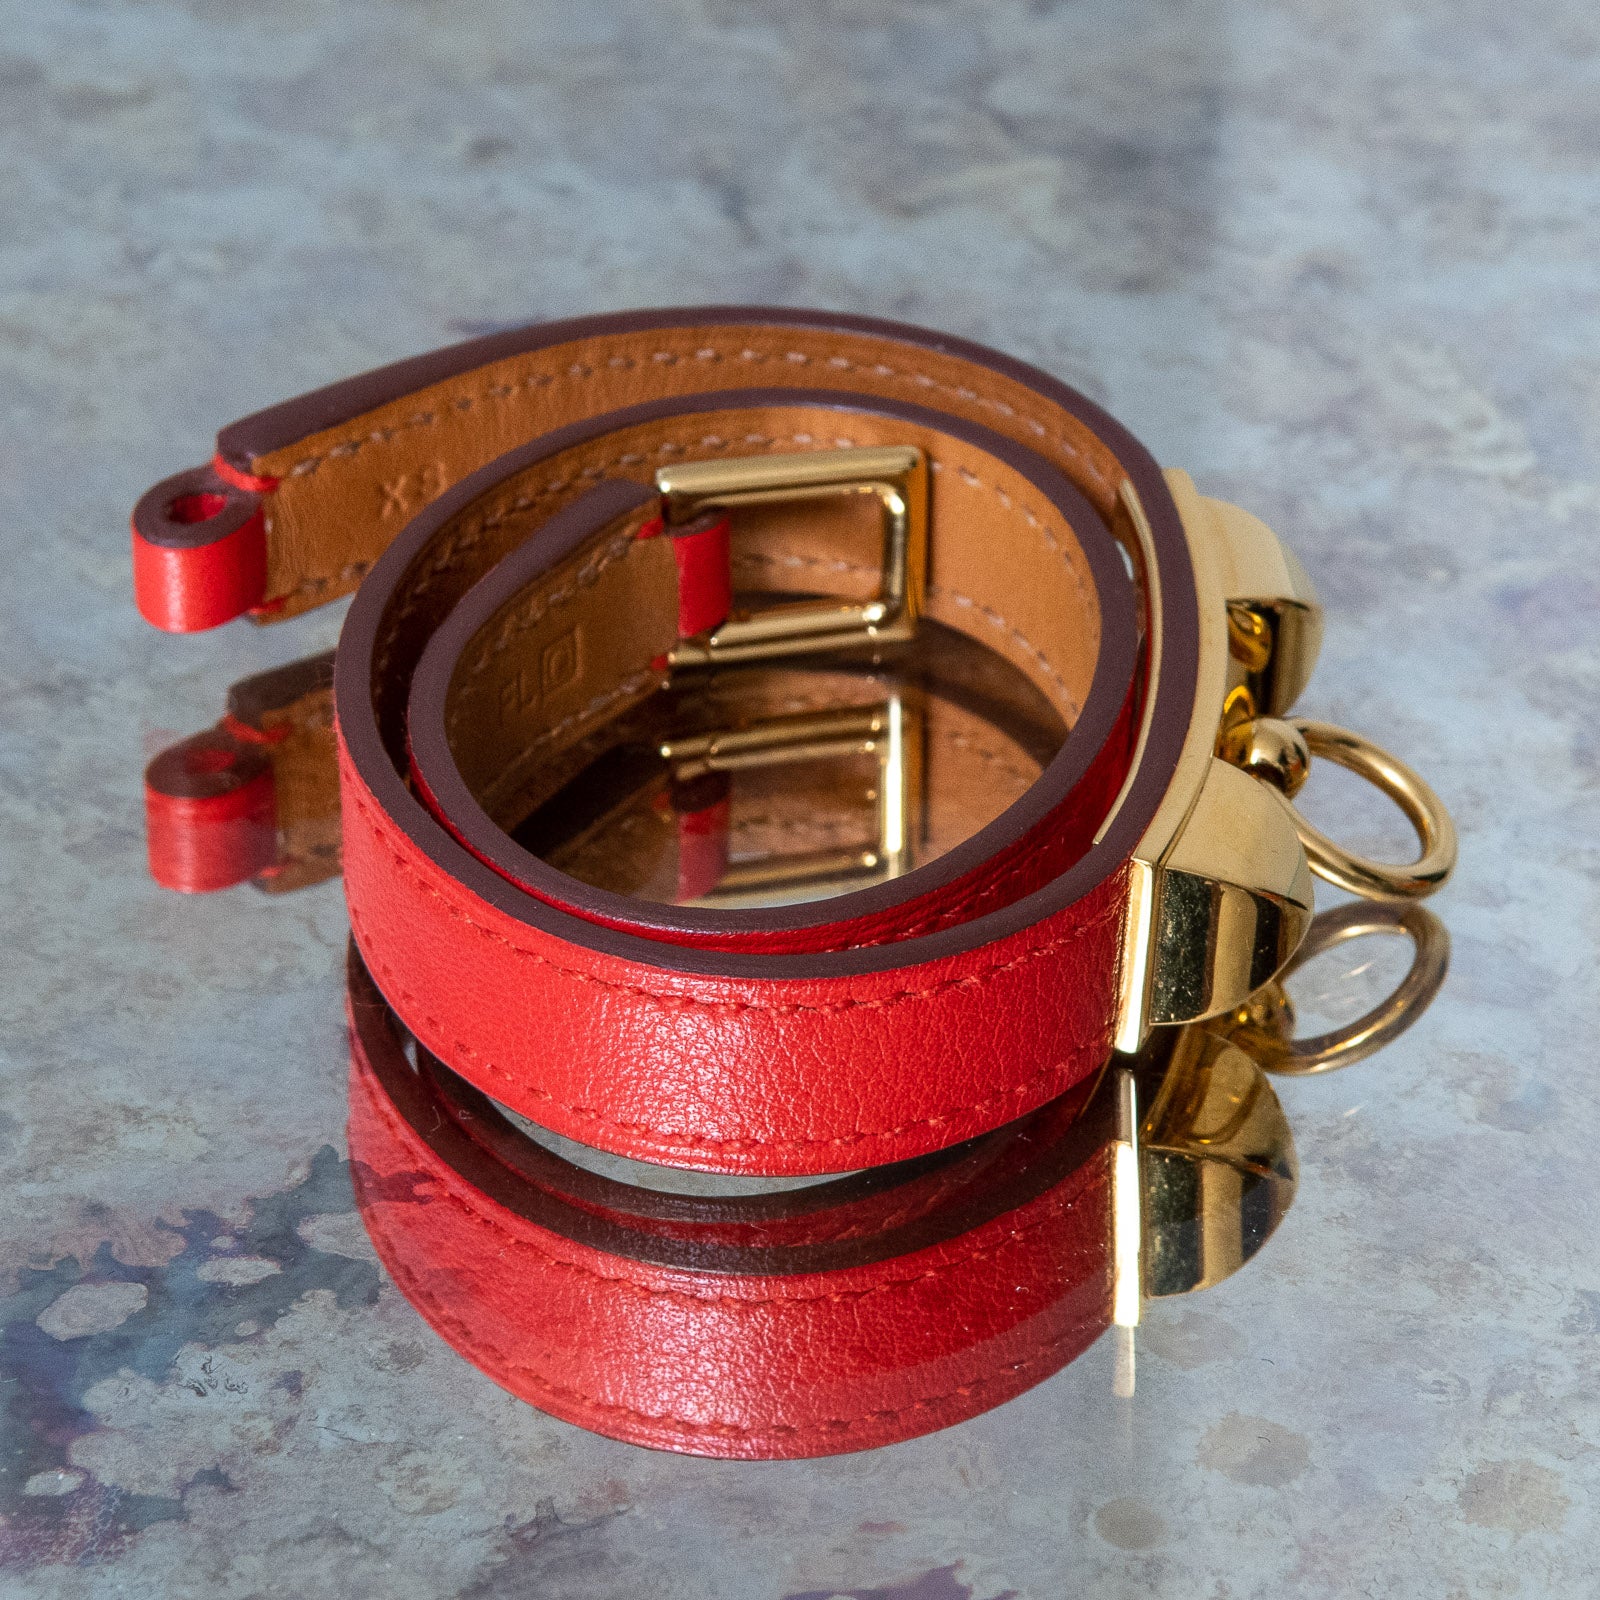 Leather Bracelet Hermes, buy pre-owned at 150 EUR